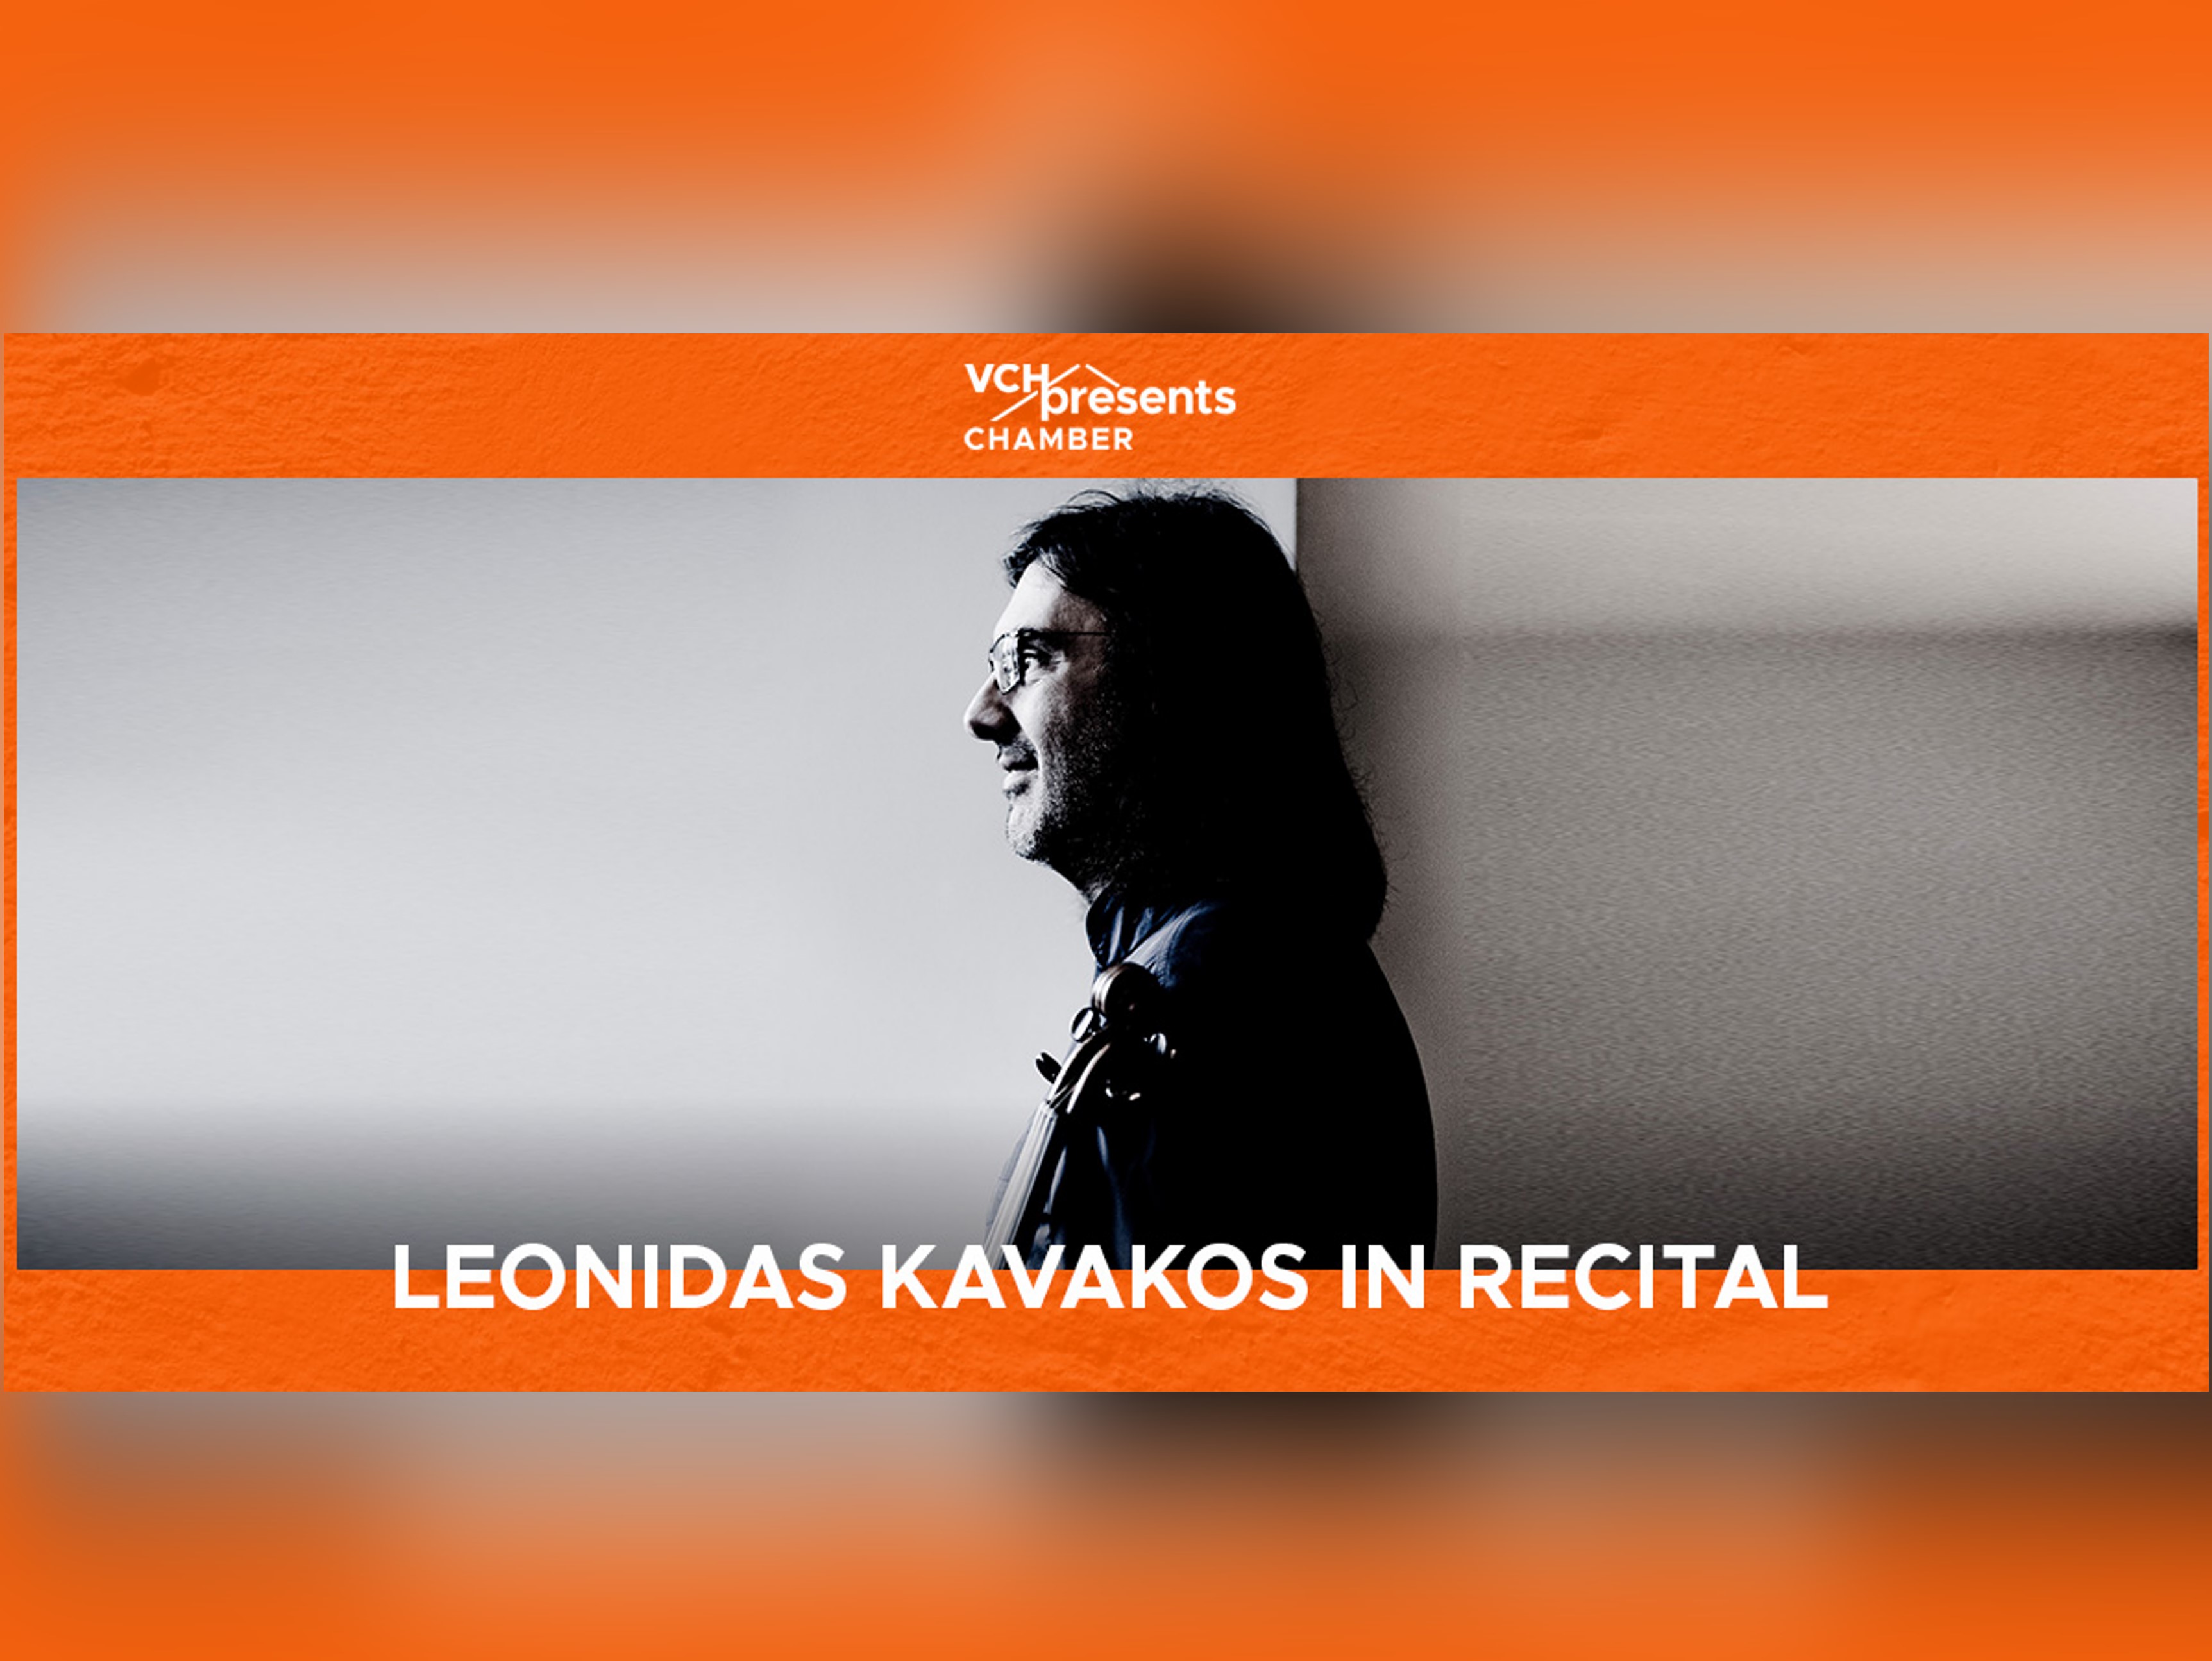 VCHpresents Chamber: Leonidas Kavakos in Recital